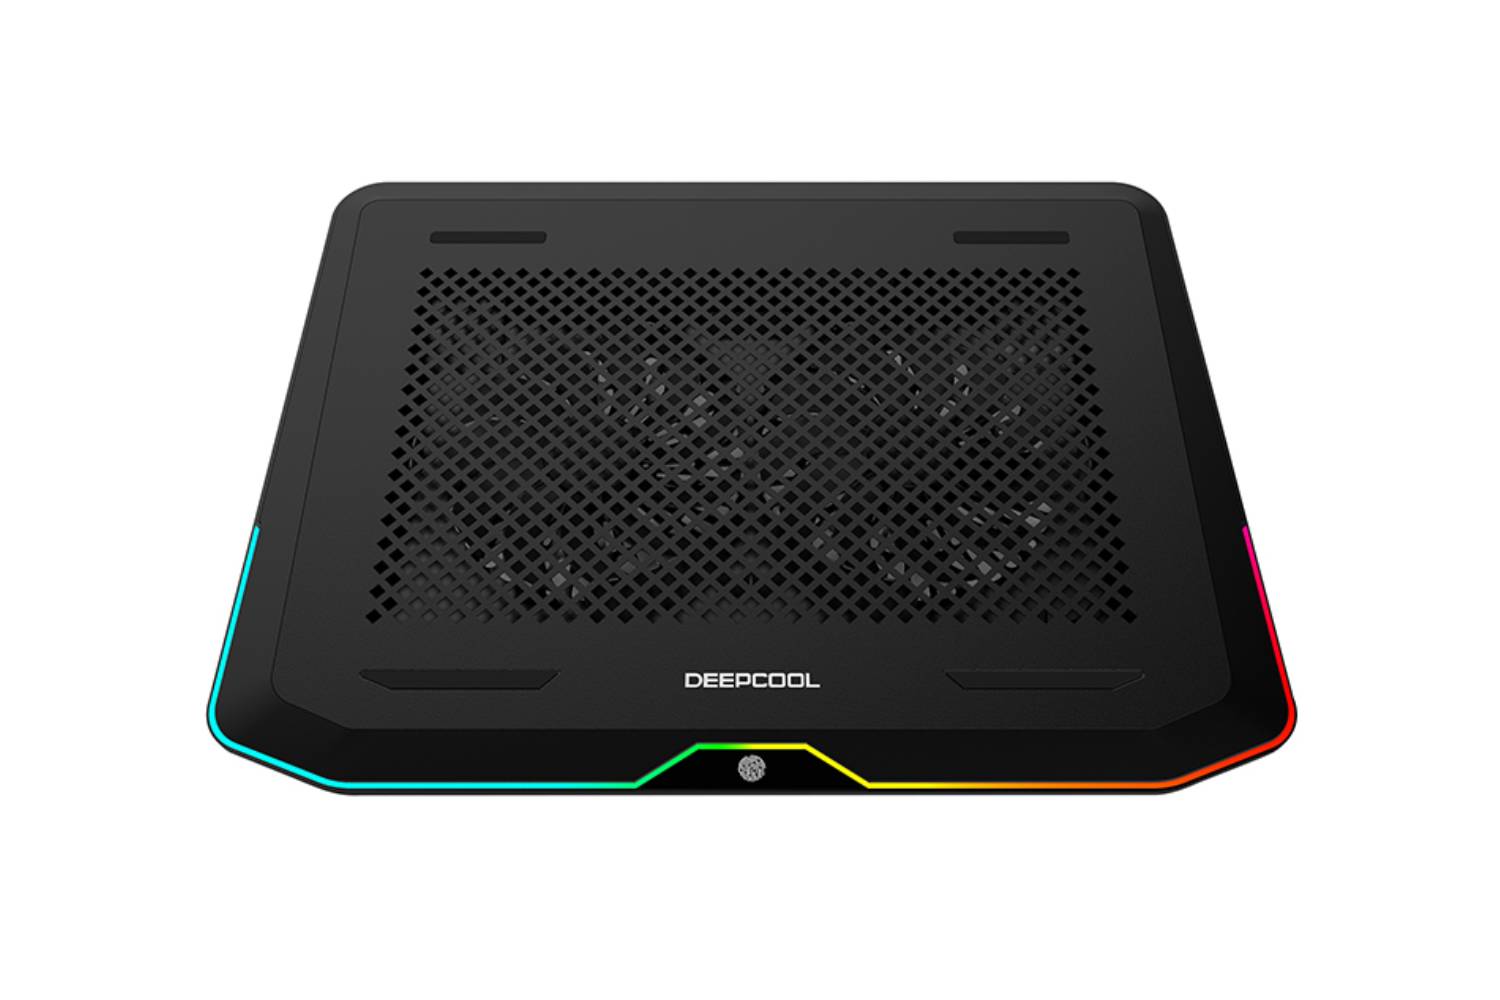 Deepcool N80 RGB laptop Dual 140mm silent Cooling pad